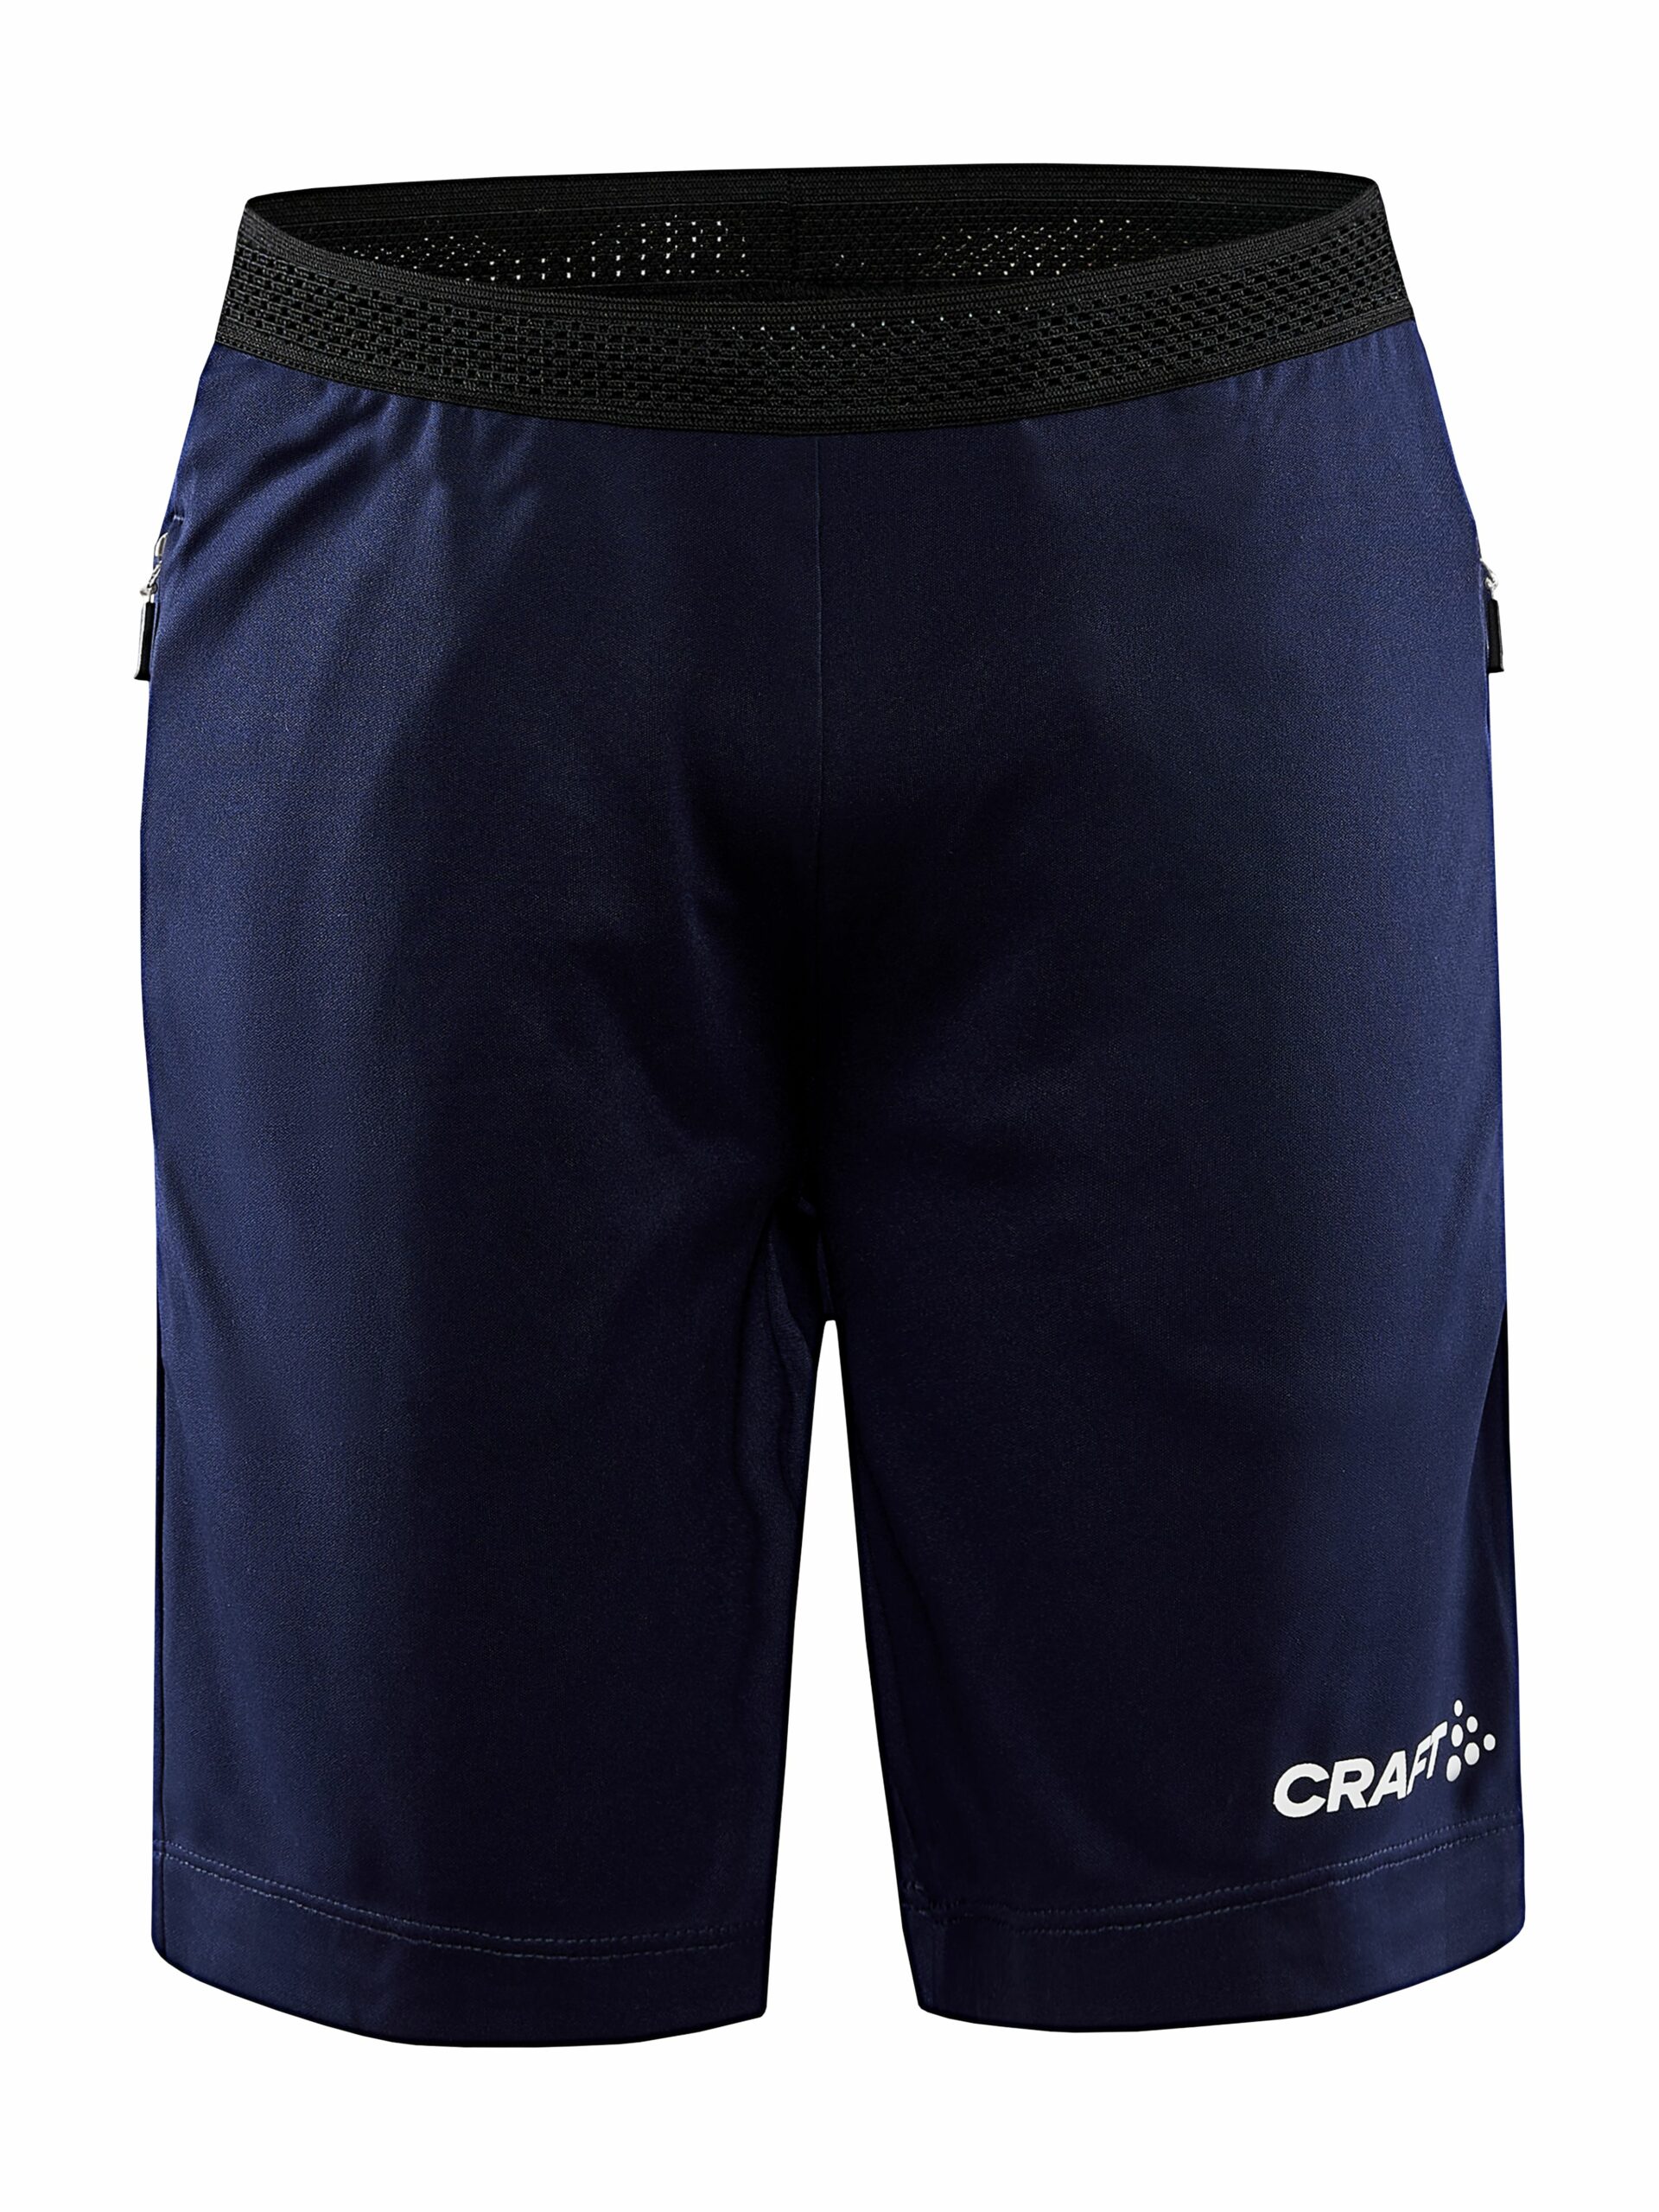 Craft - Evolve Zip Pocket Shorts JR - Navy 158/164